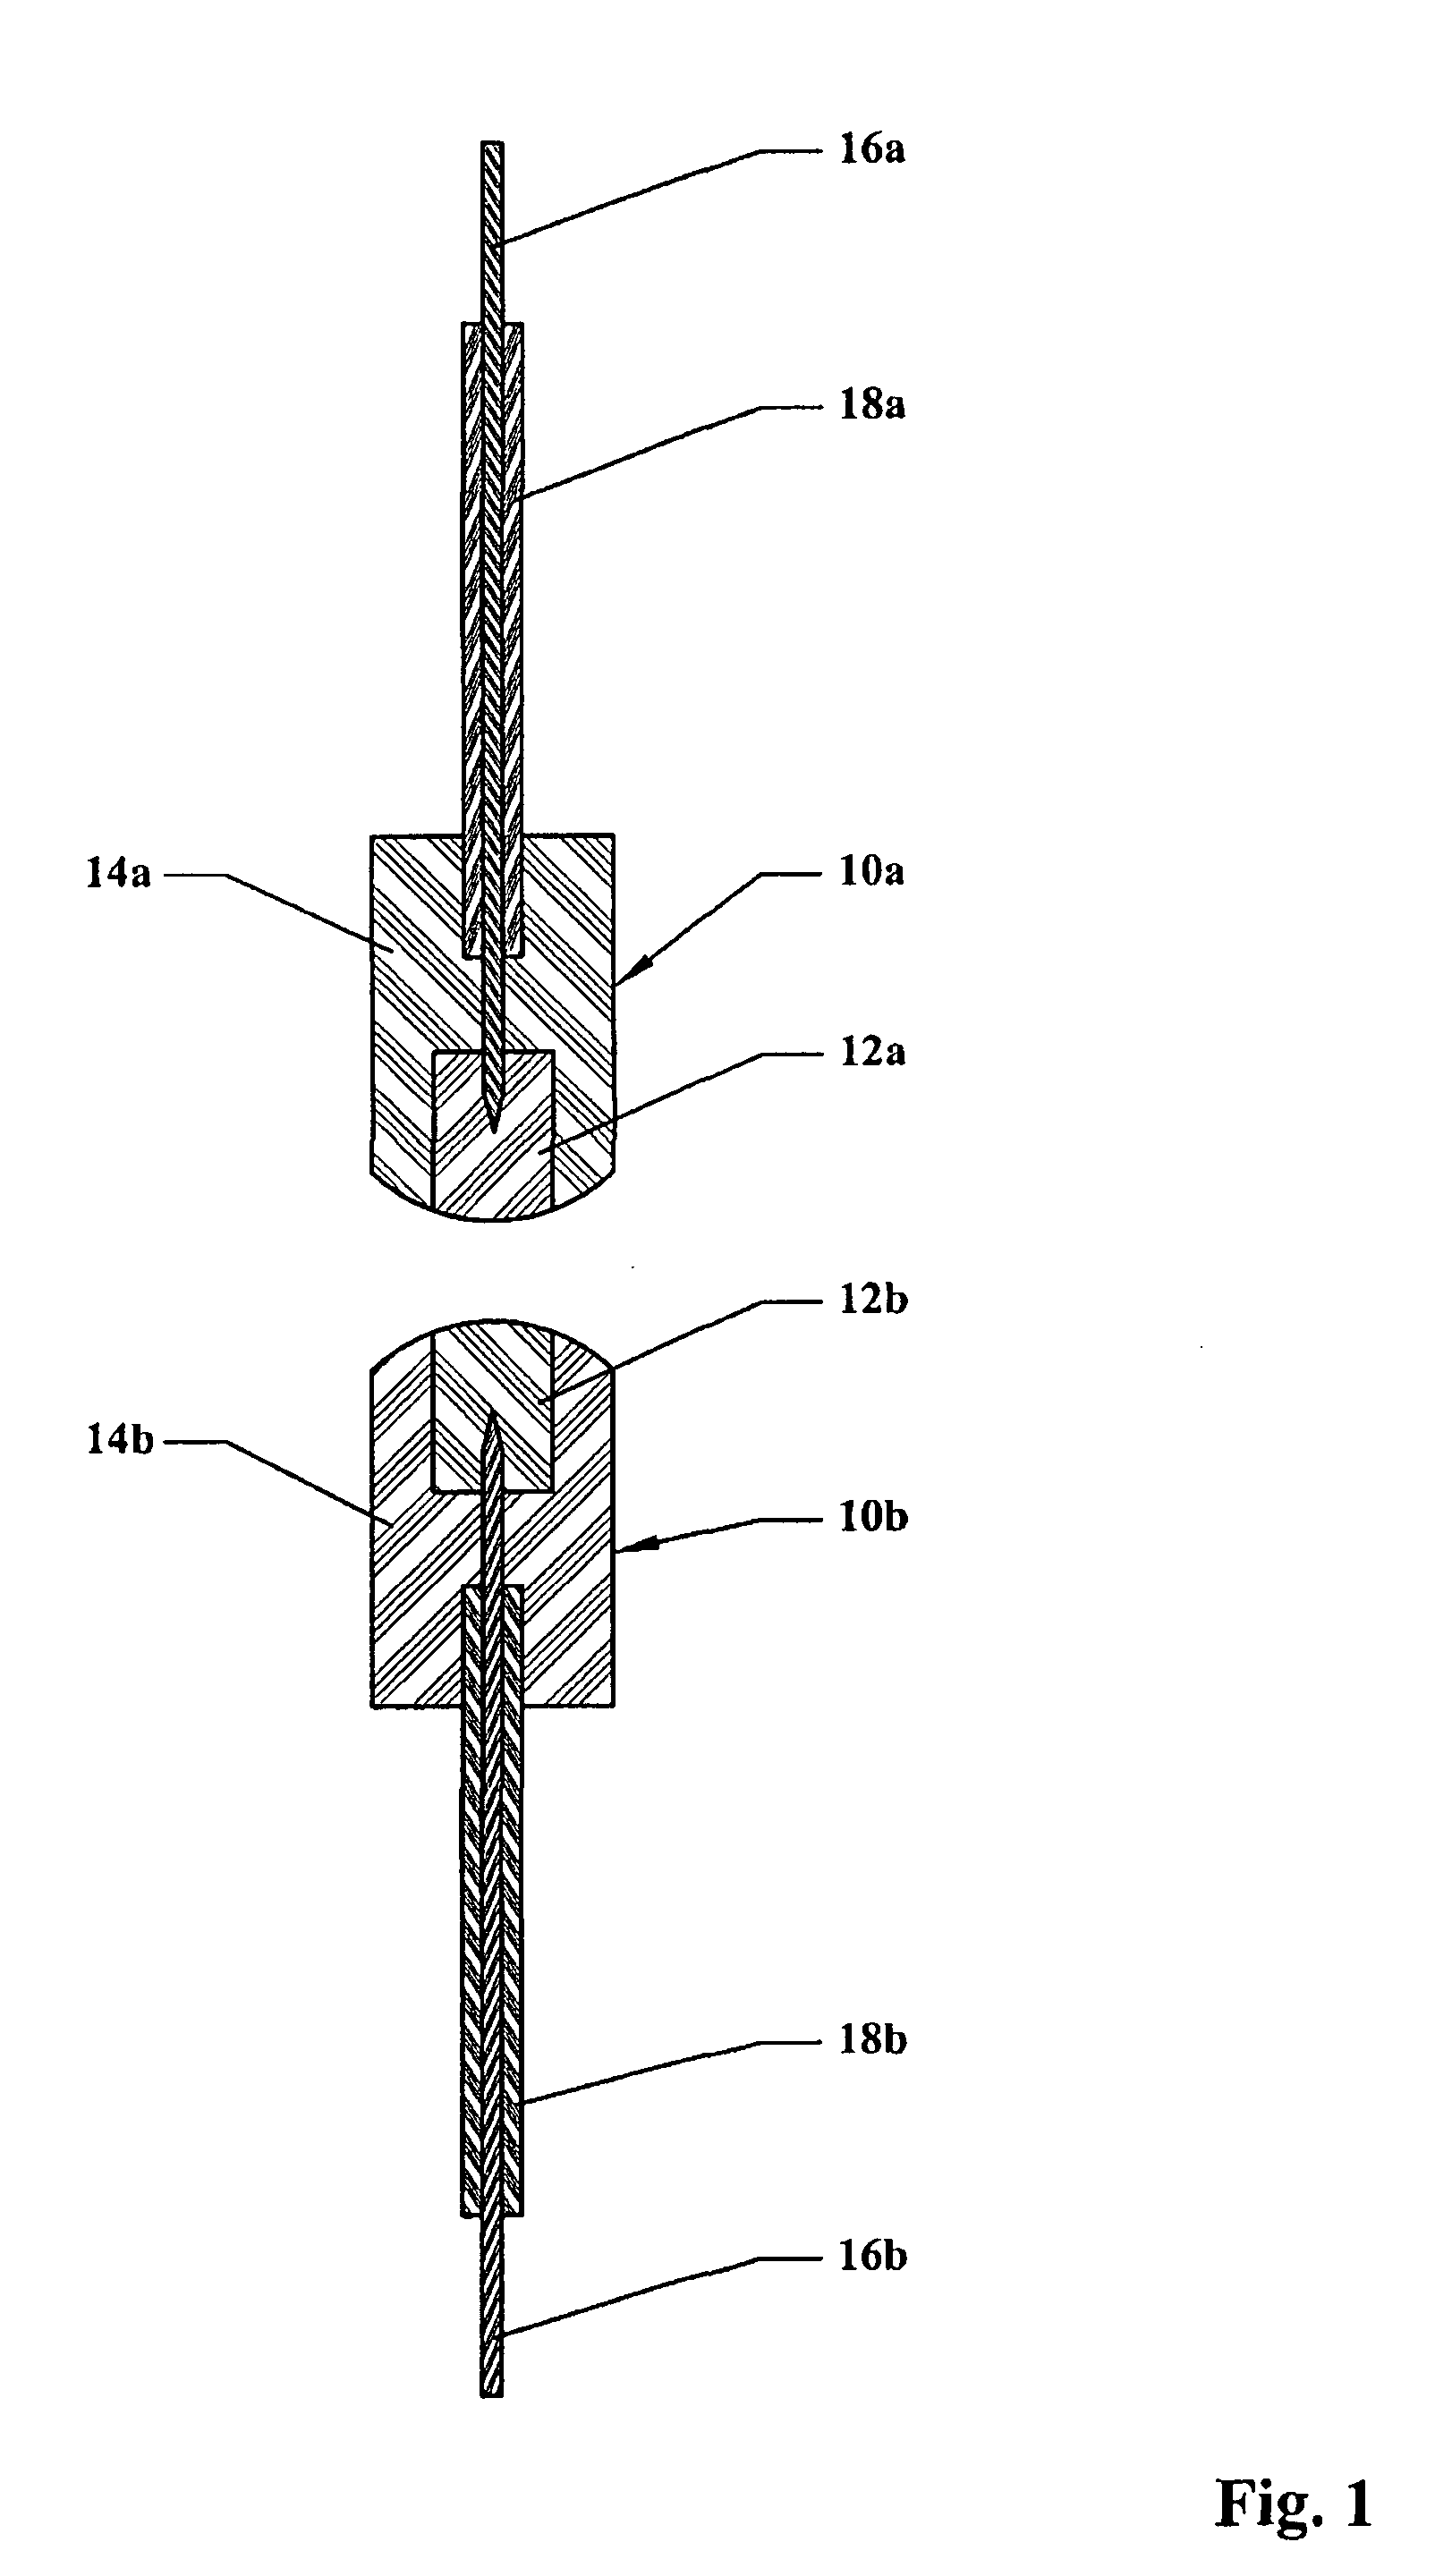 Sealed eurytopic make-break connector utilizing a conductive elastomer contact